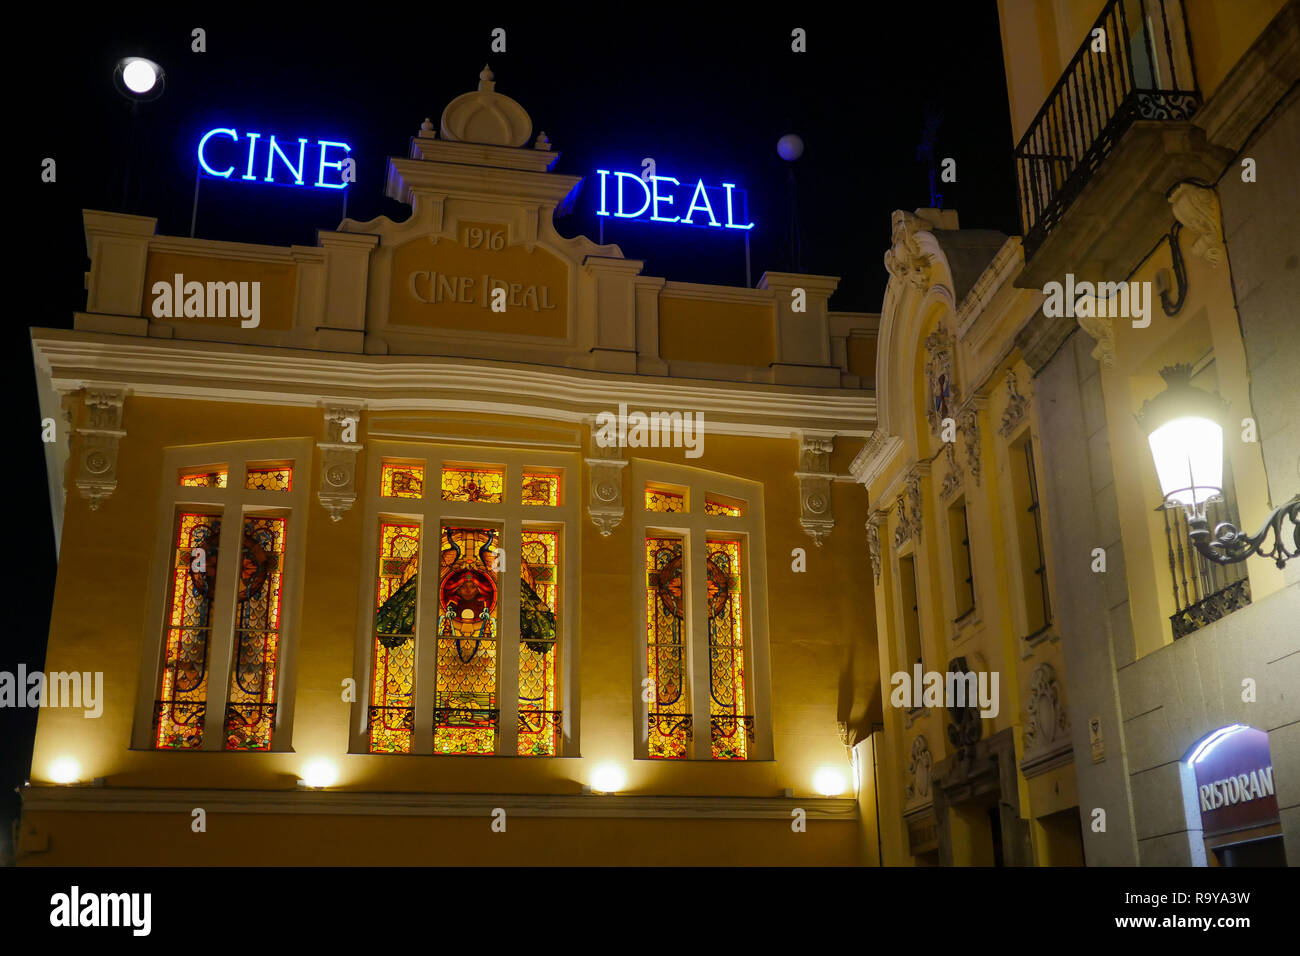 Cinema Ideal, Madrid, Spain Stock Photo - Alamy